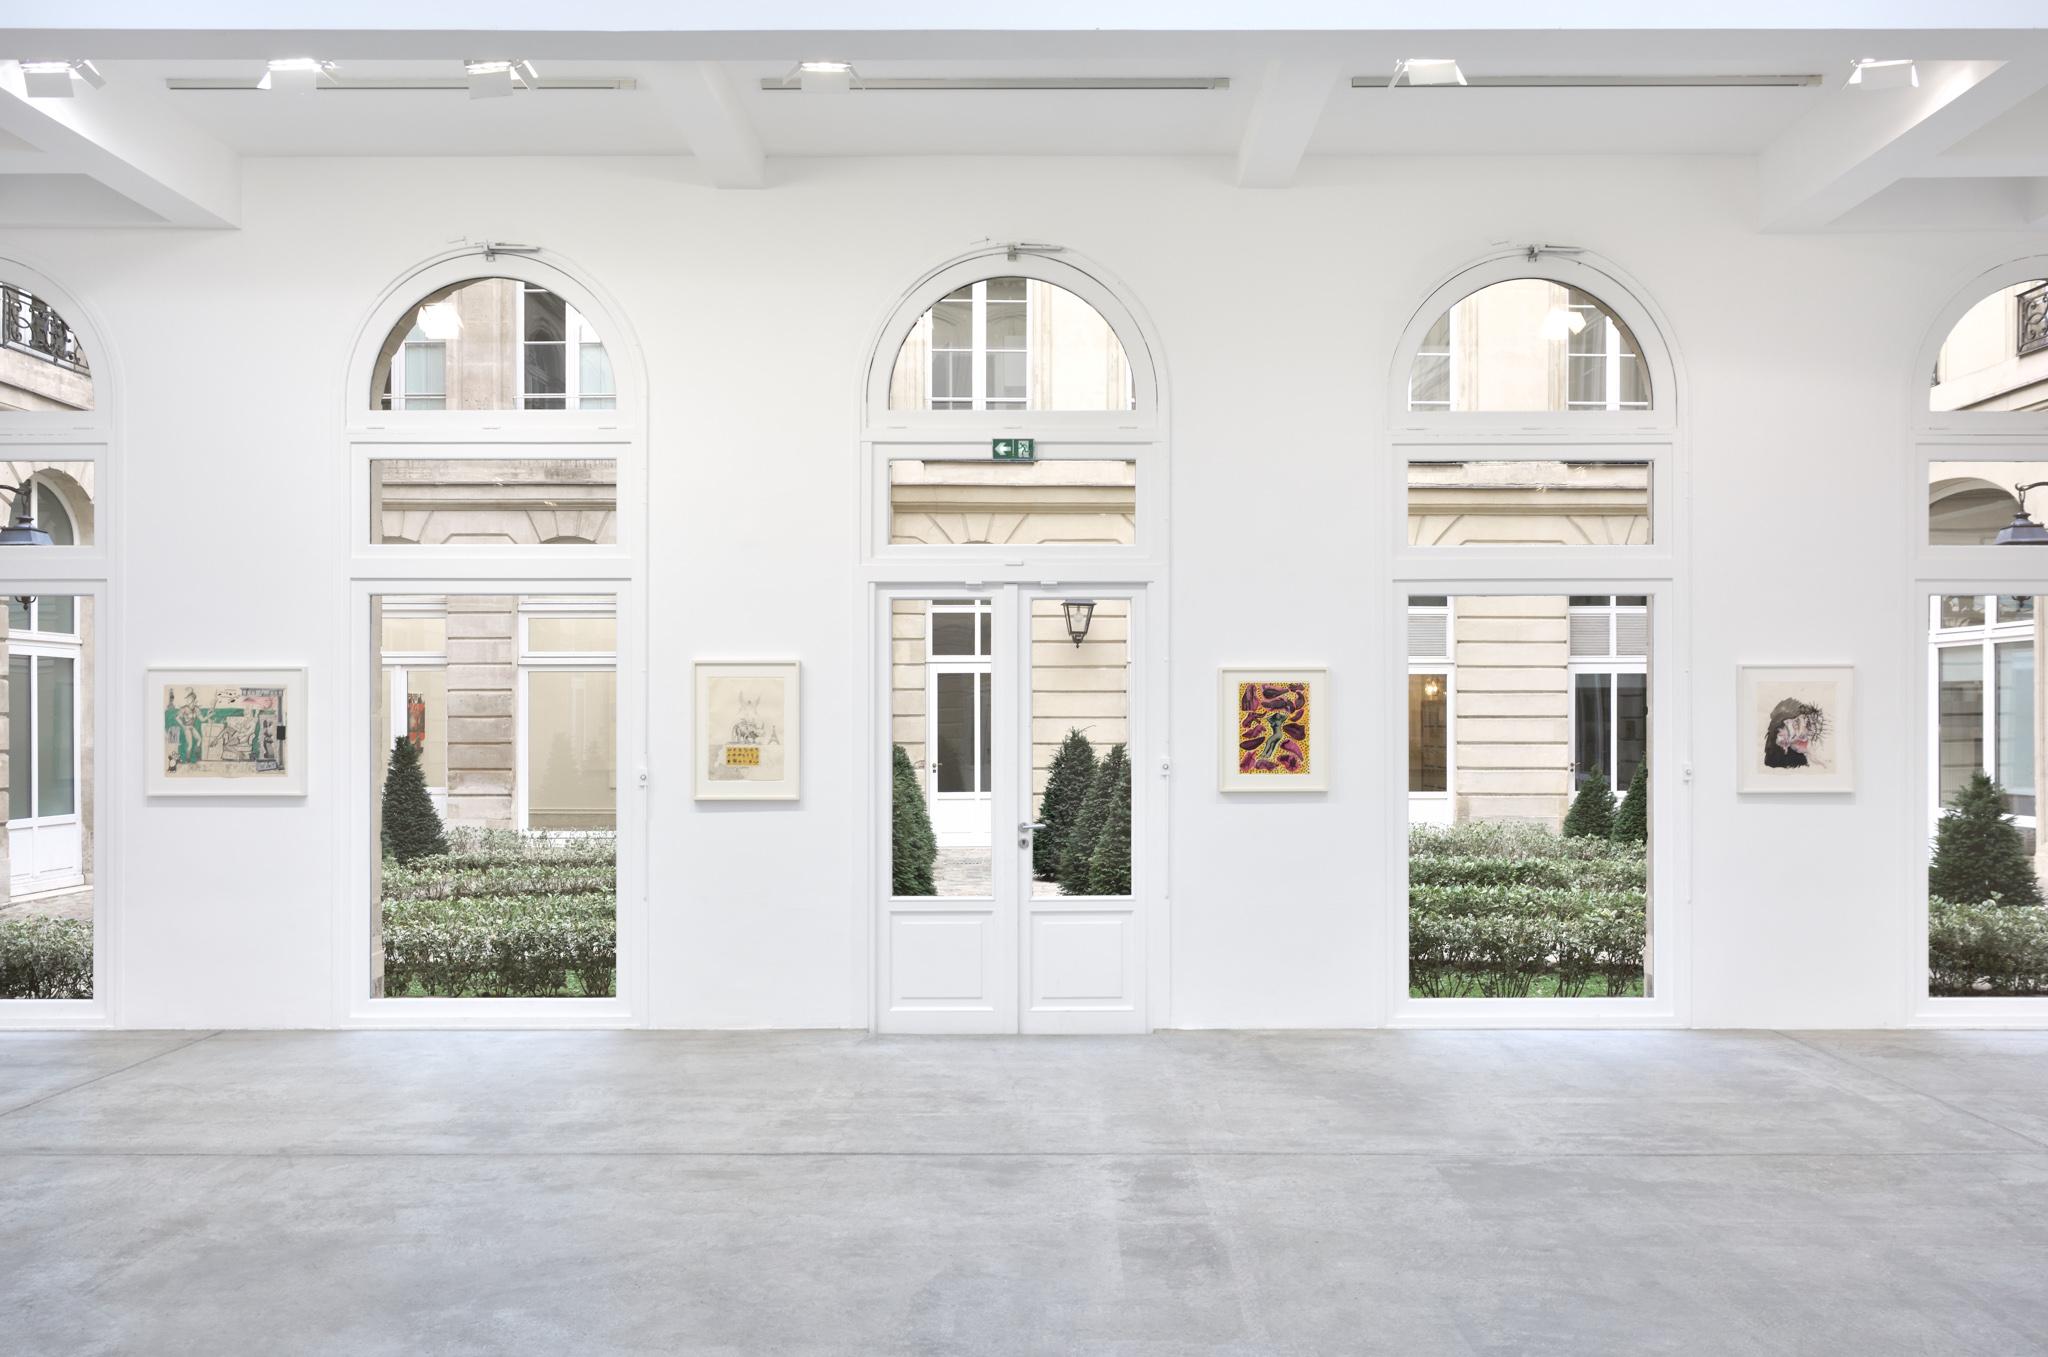 Installation view of the exhibition Robert Smithson Mundus Subeterraneus on view in Paris